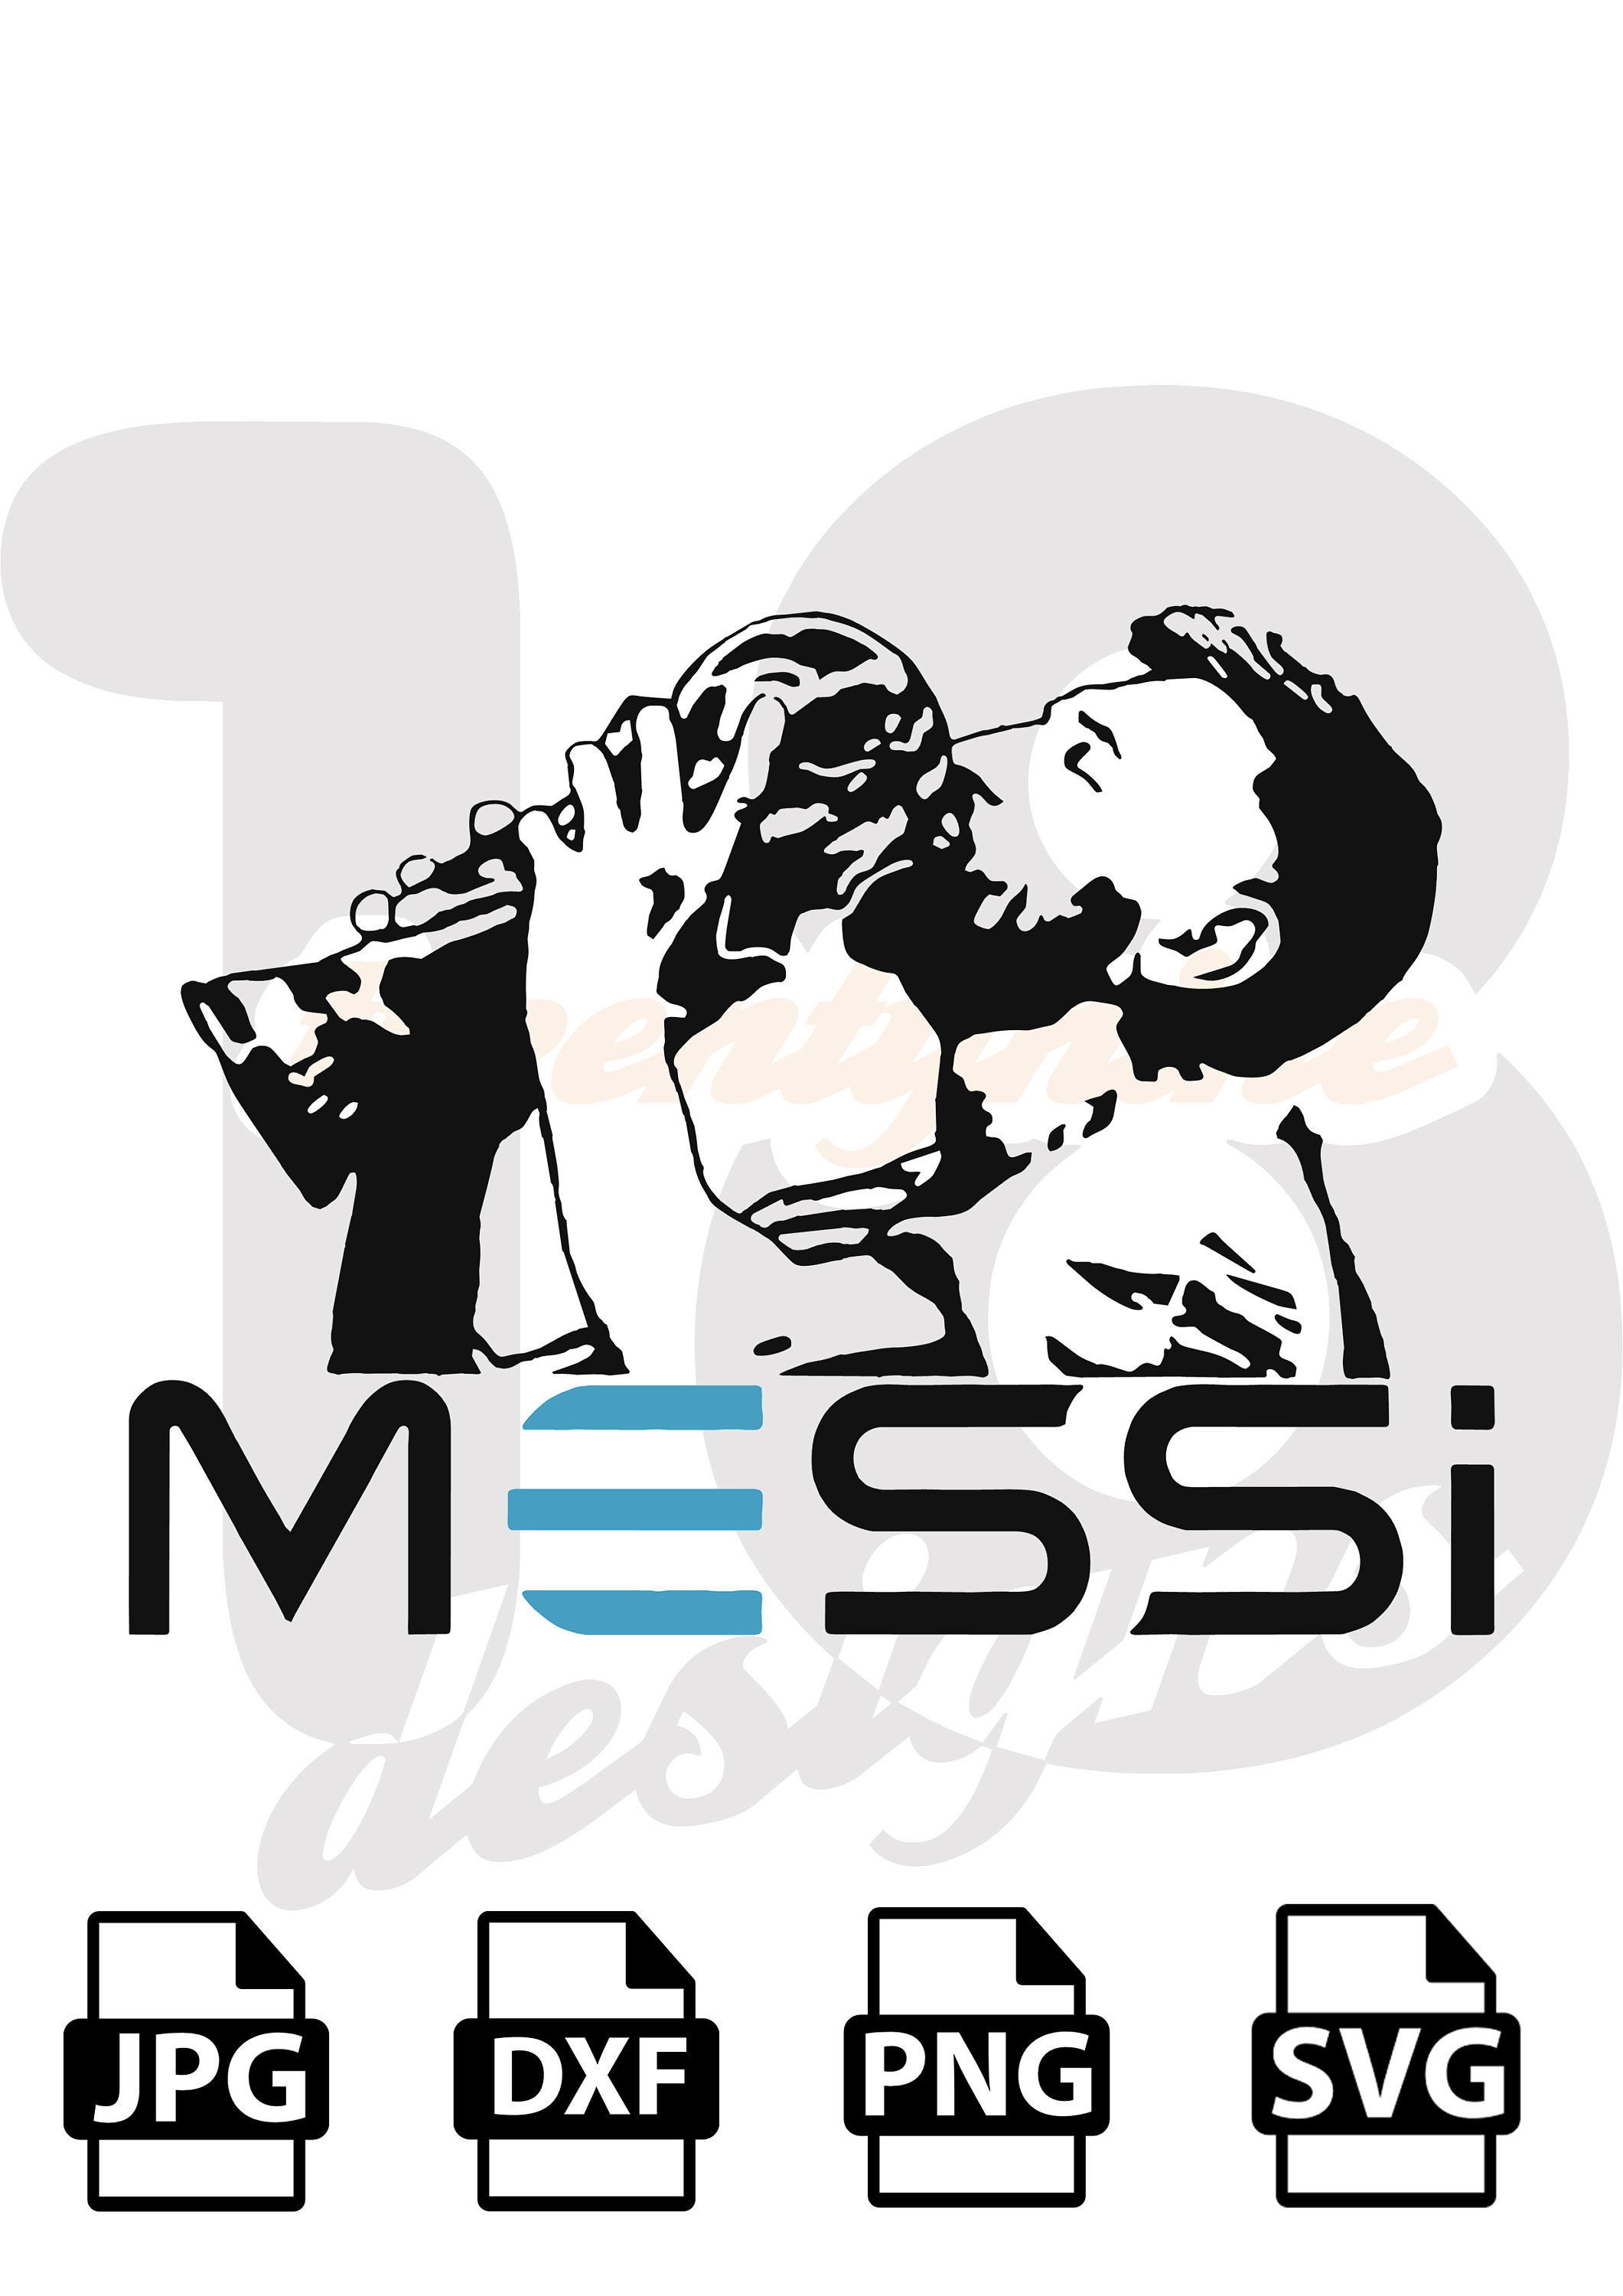 The Nation Of Blaugrana - Concept art of Lionel Messi's FIFA icon cards. 🐐  #Joshua